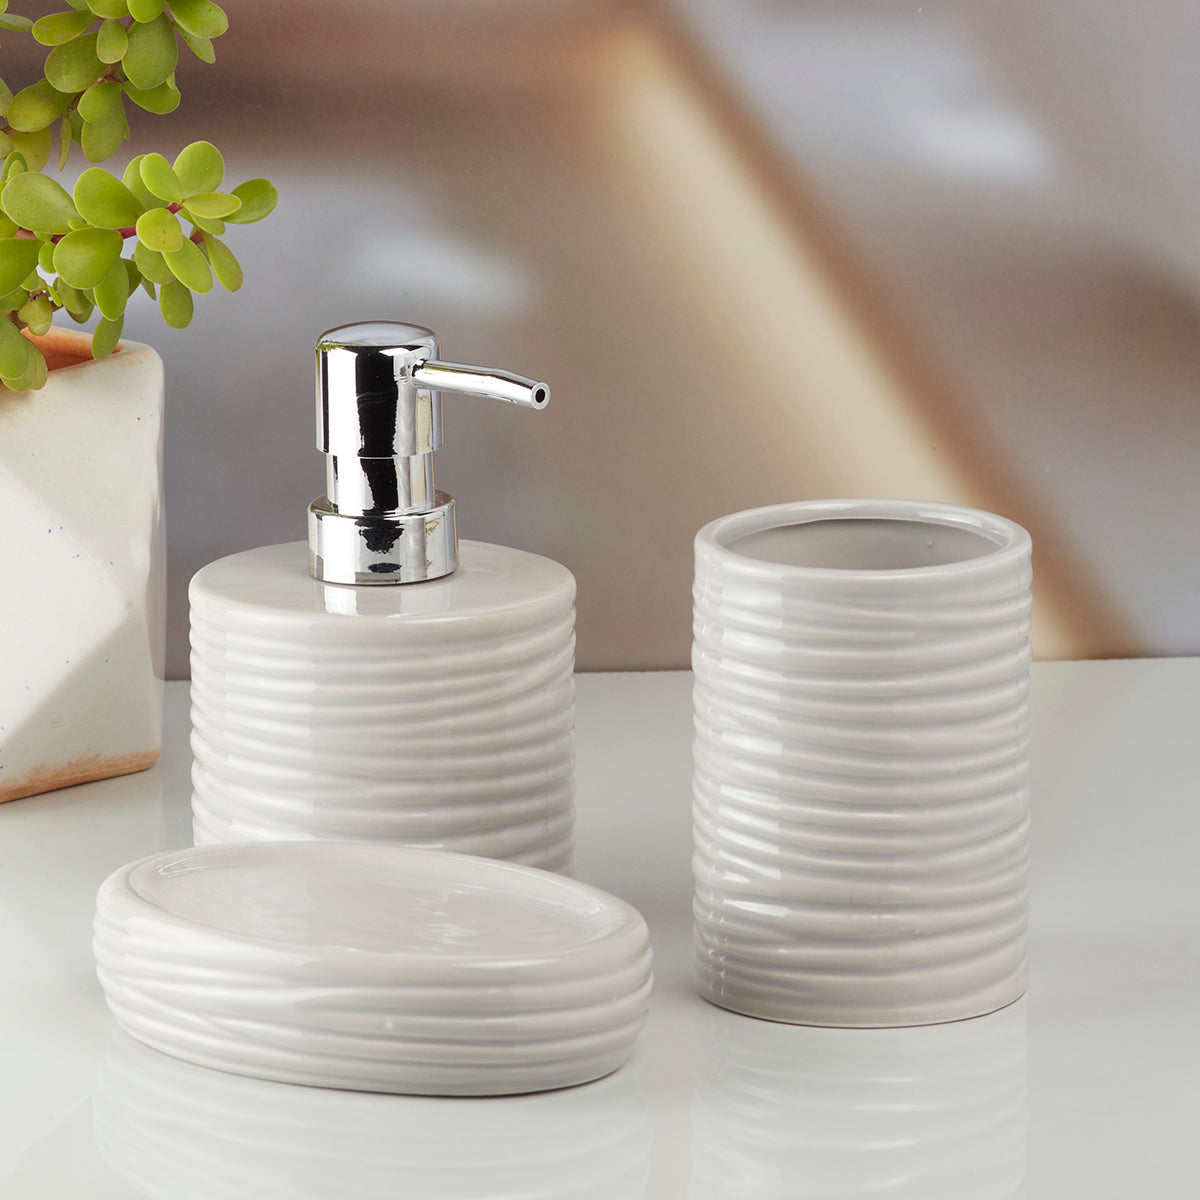 Ceramic Bathroom Accessories Set of 3 Bath Set with Soap Dispenser (10196)